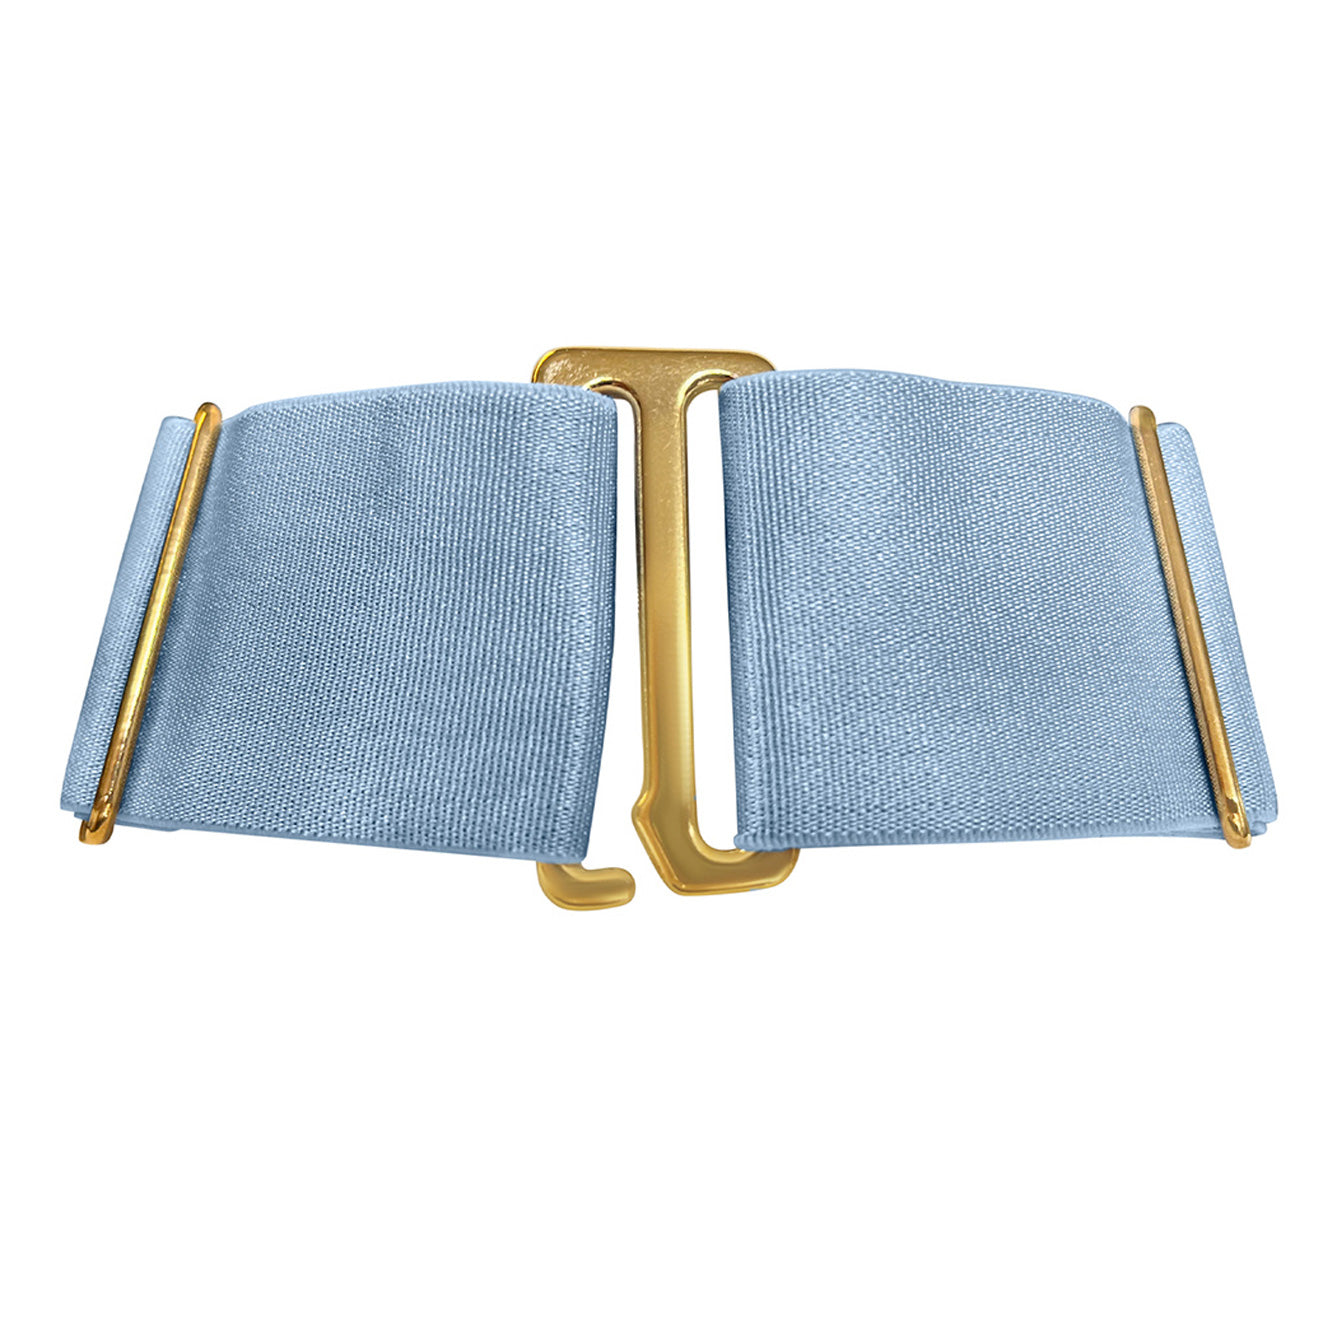 Vero collar by Bordelle - dusty blue